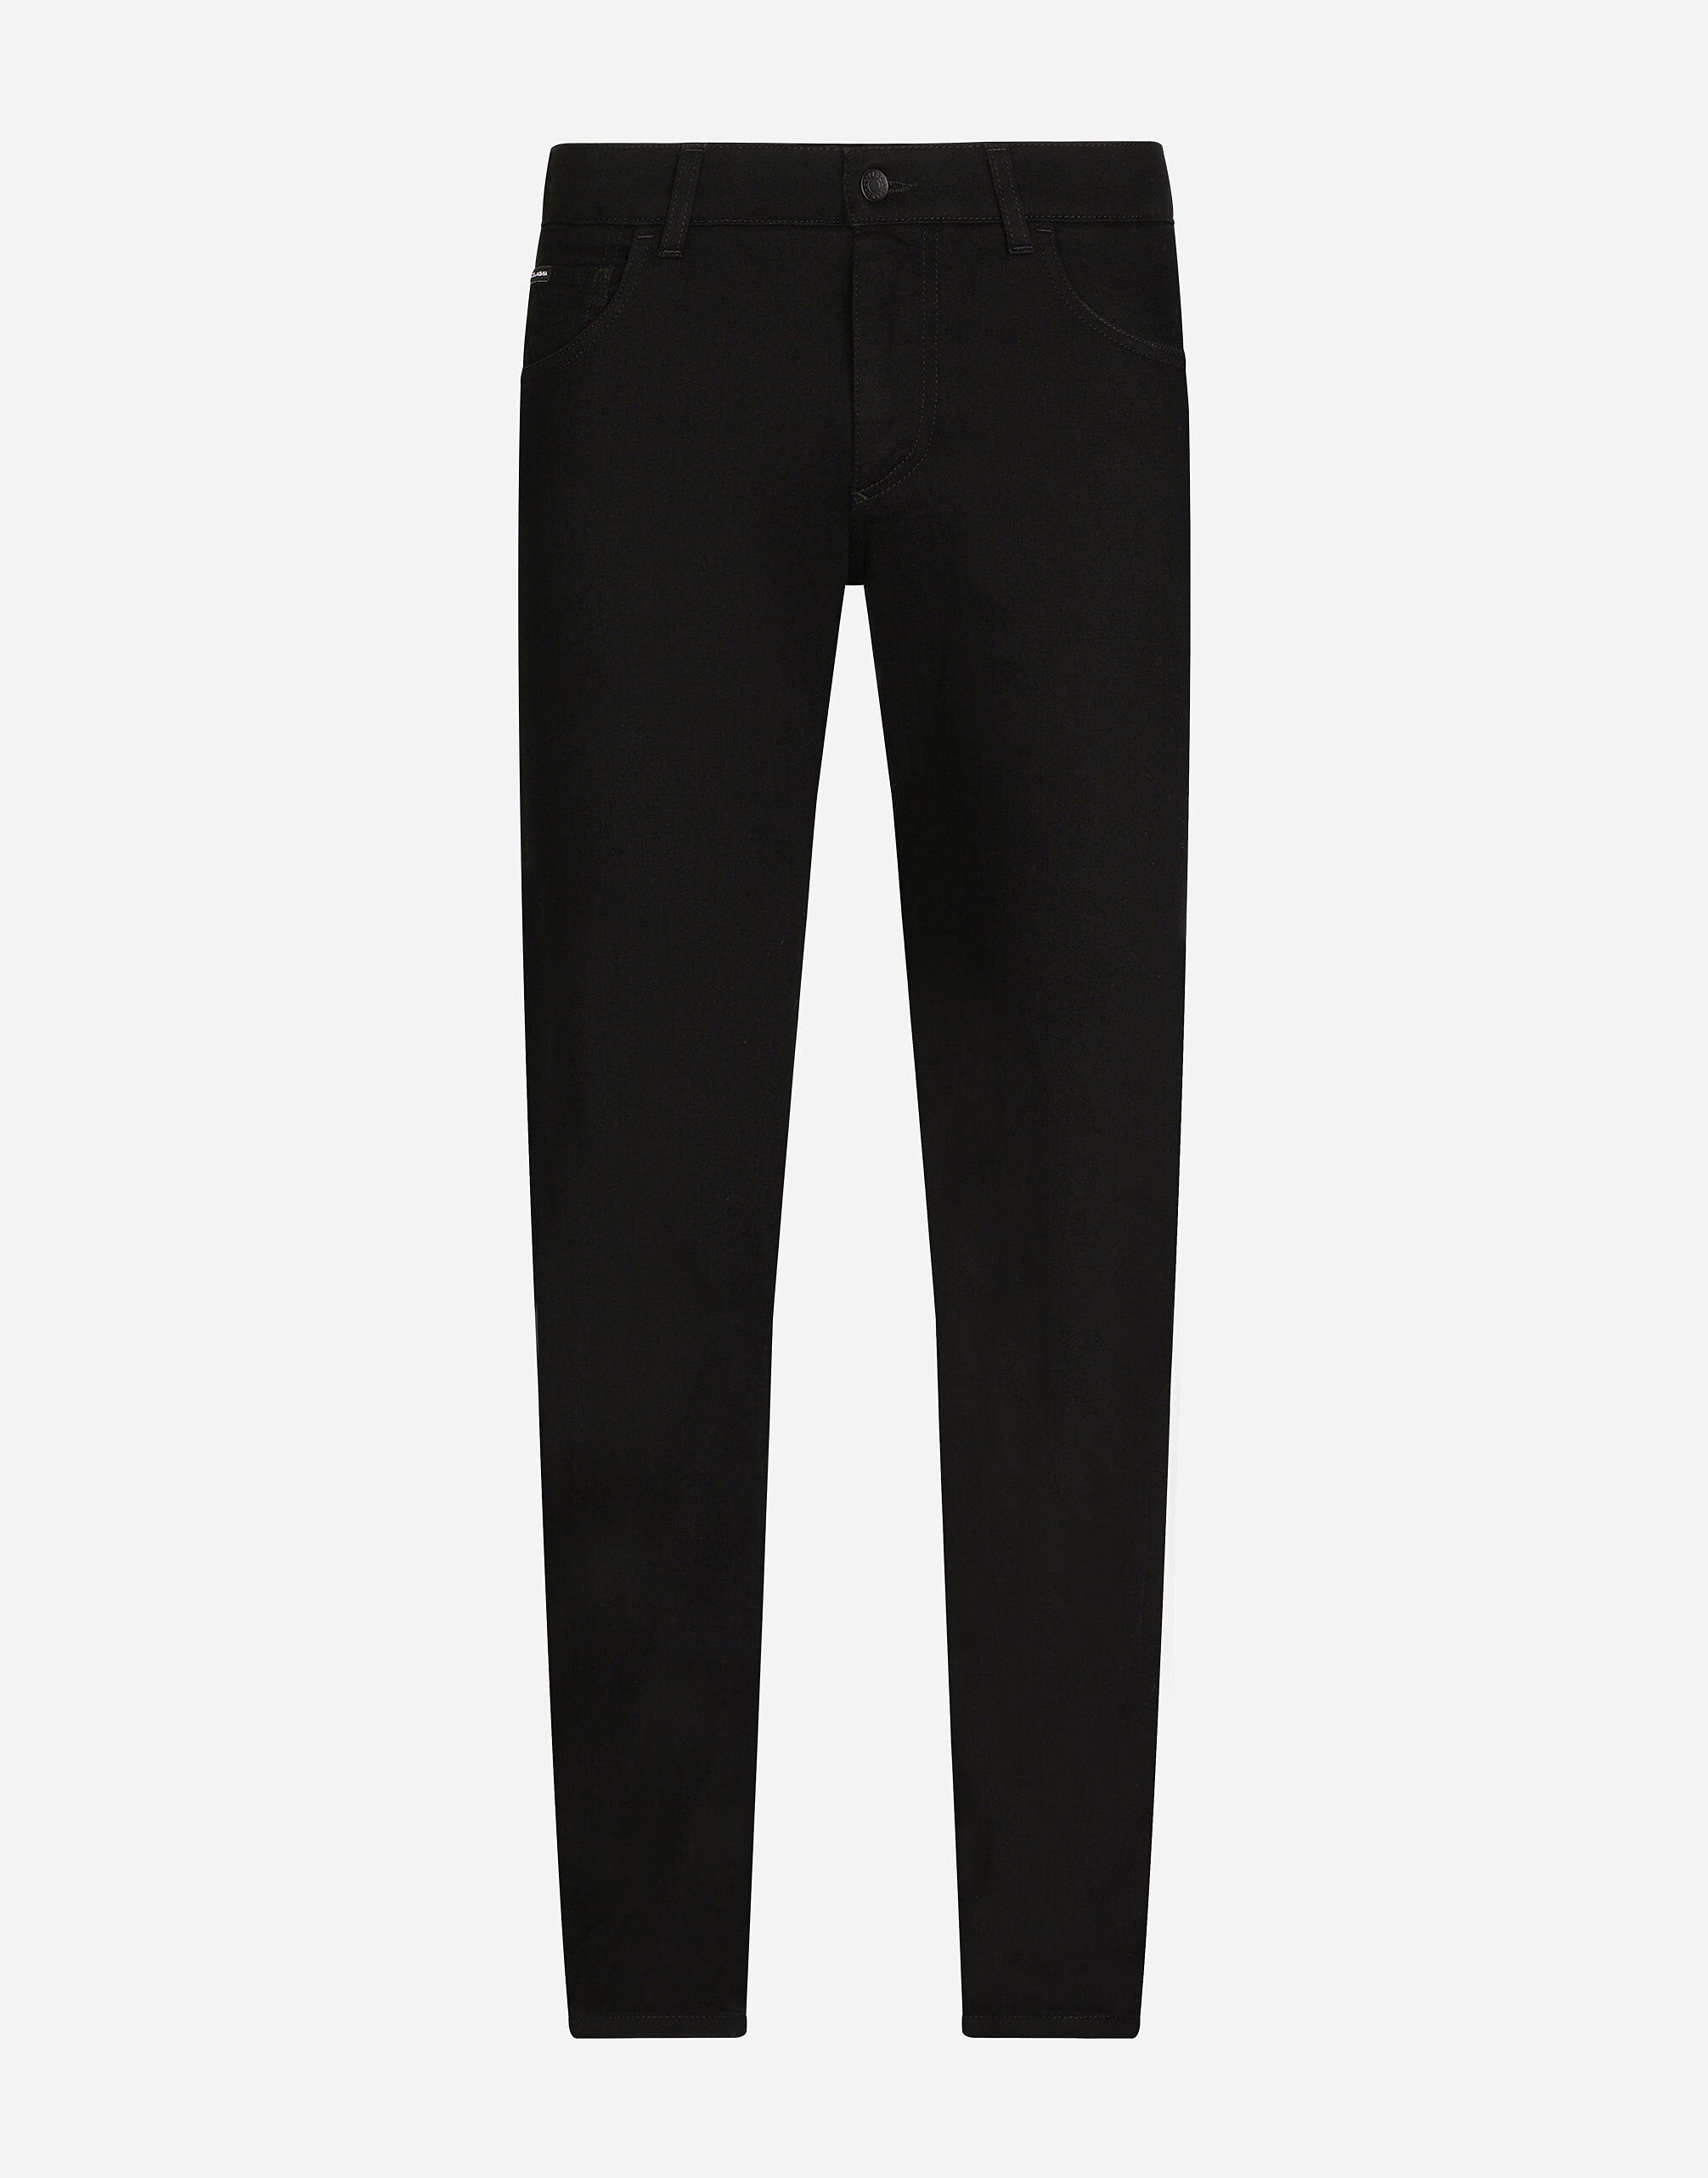 Dolce & Gabbana Black slim-fit stretch jeans Black GY07CDG8CO2